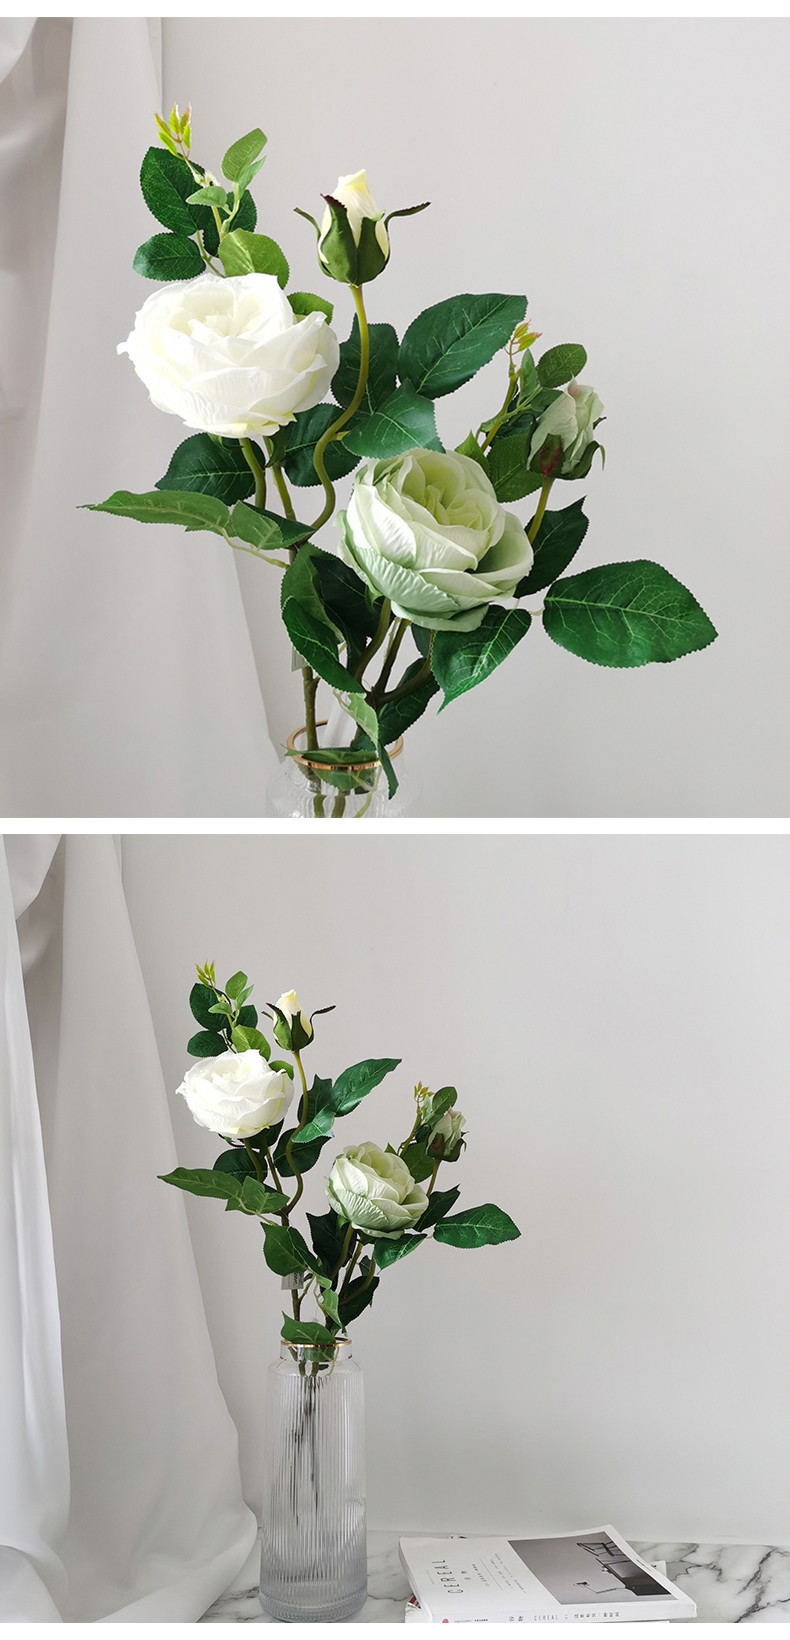 Artificial 2 heads silk rose stem rose bulk for wedding home party decoration fake simulation rose flower